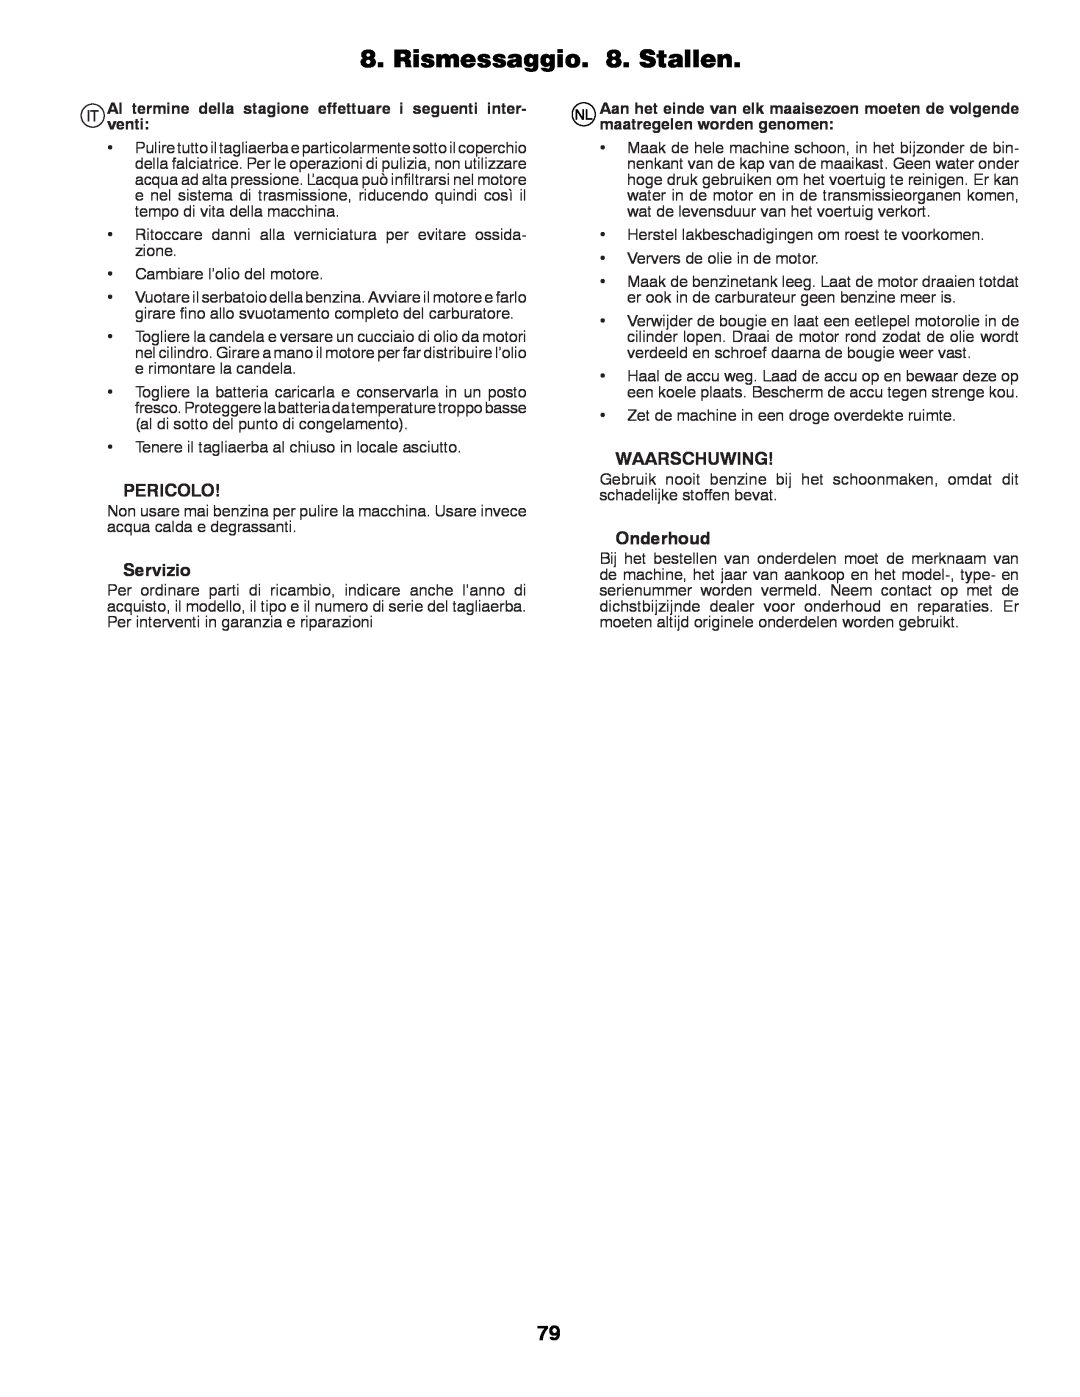 Partner Tech P145107H instruction manual Rismessaggio. 8. Stallen, Pericolo, Servizio, Waarschuwing, Onderhoud 